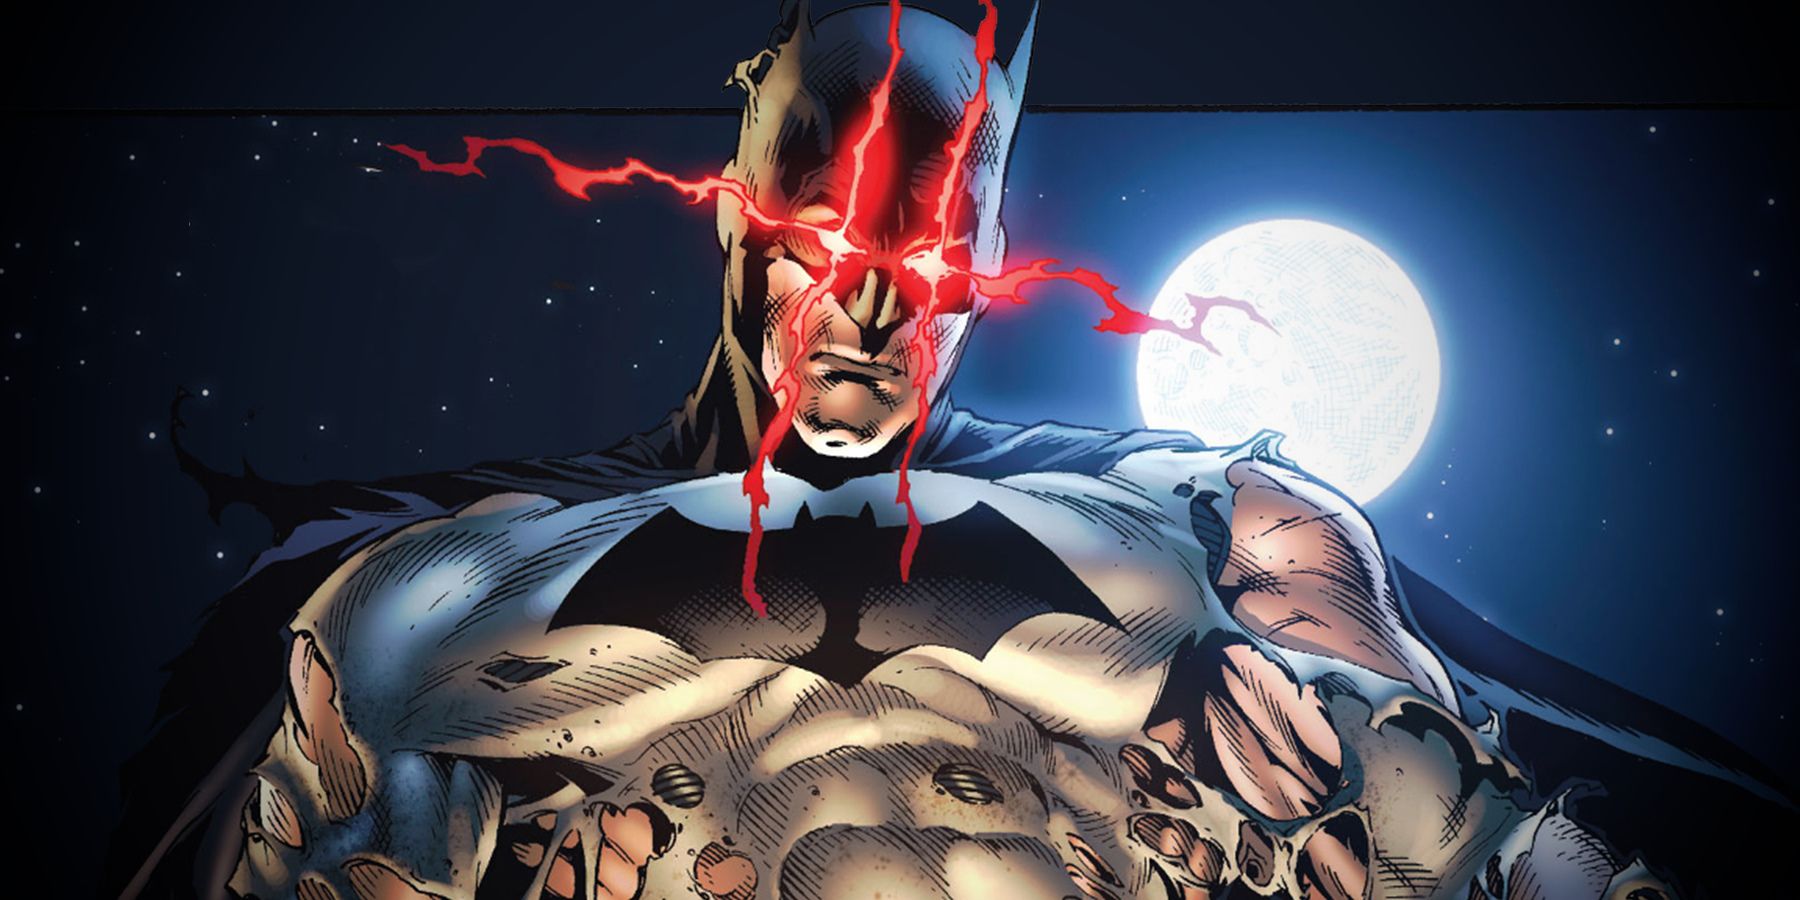 Batman with Superman Power Glowing Eyes